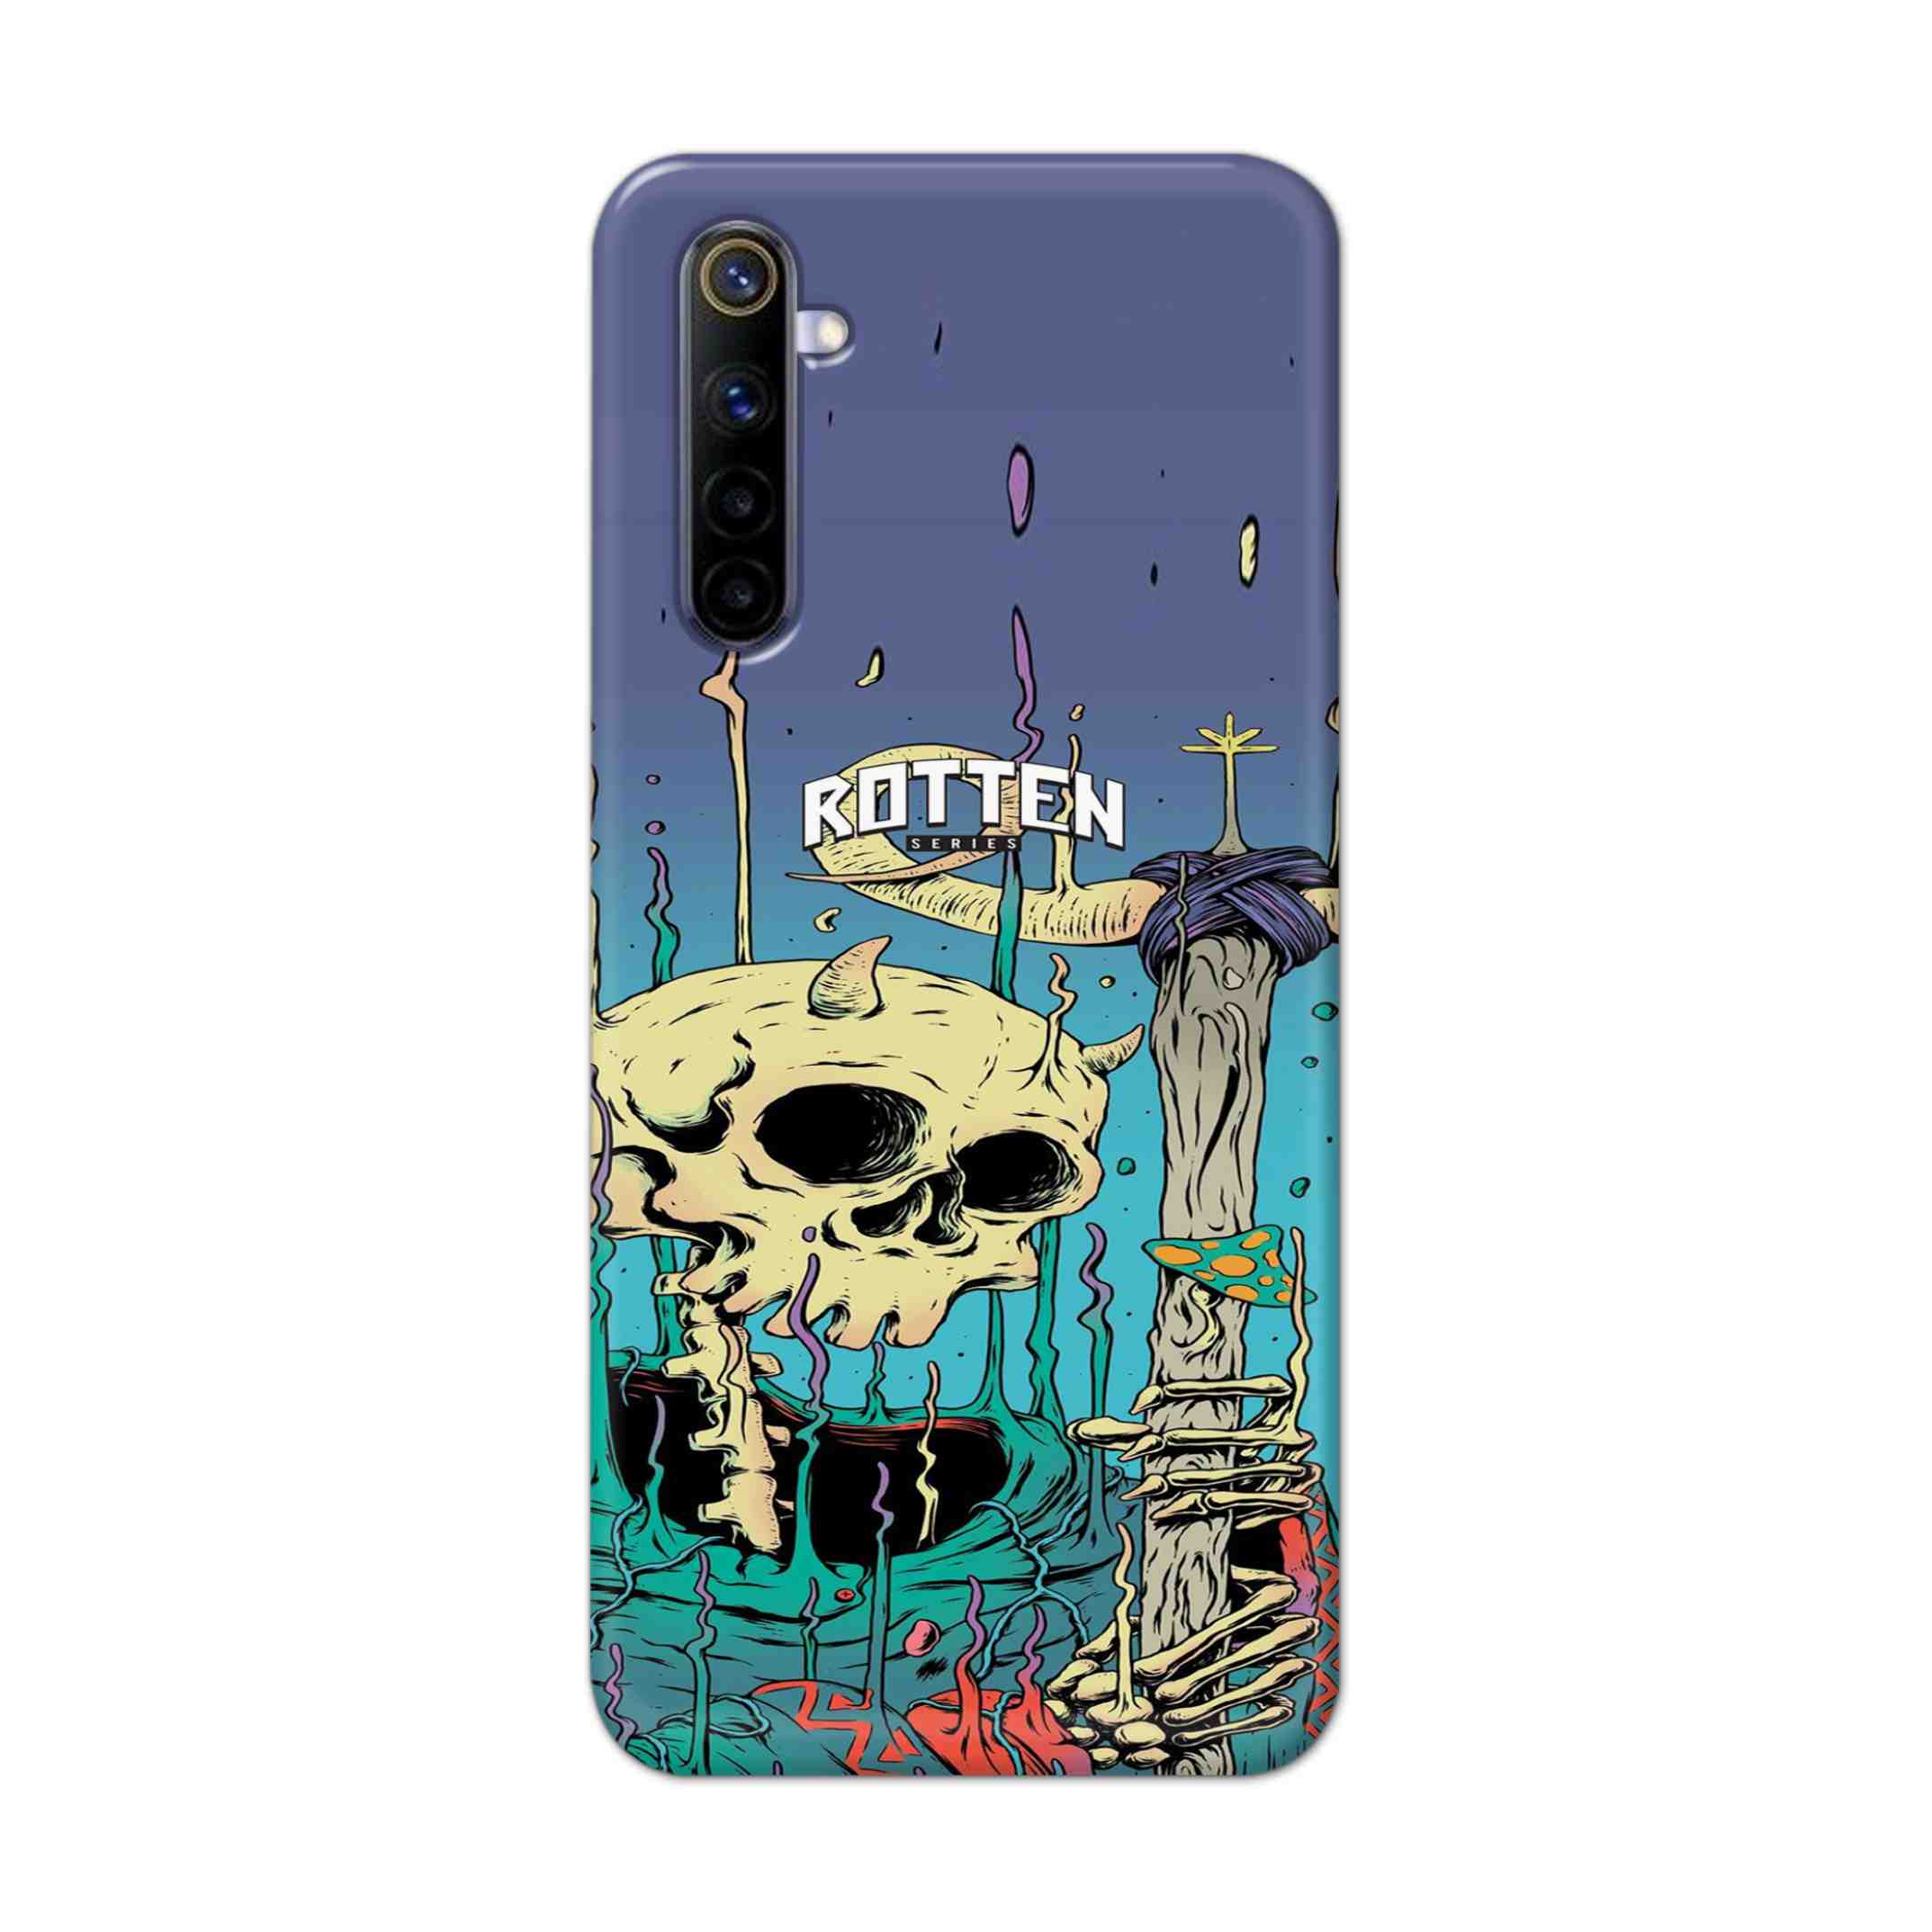 Buy Skull Hard Back Mobile Phone Case Cover For REALME 6 Online